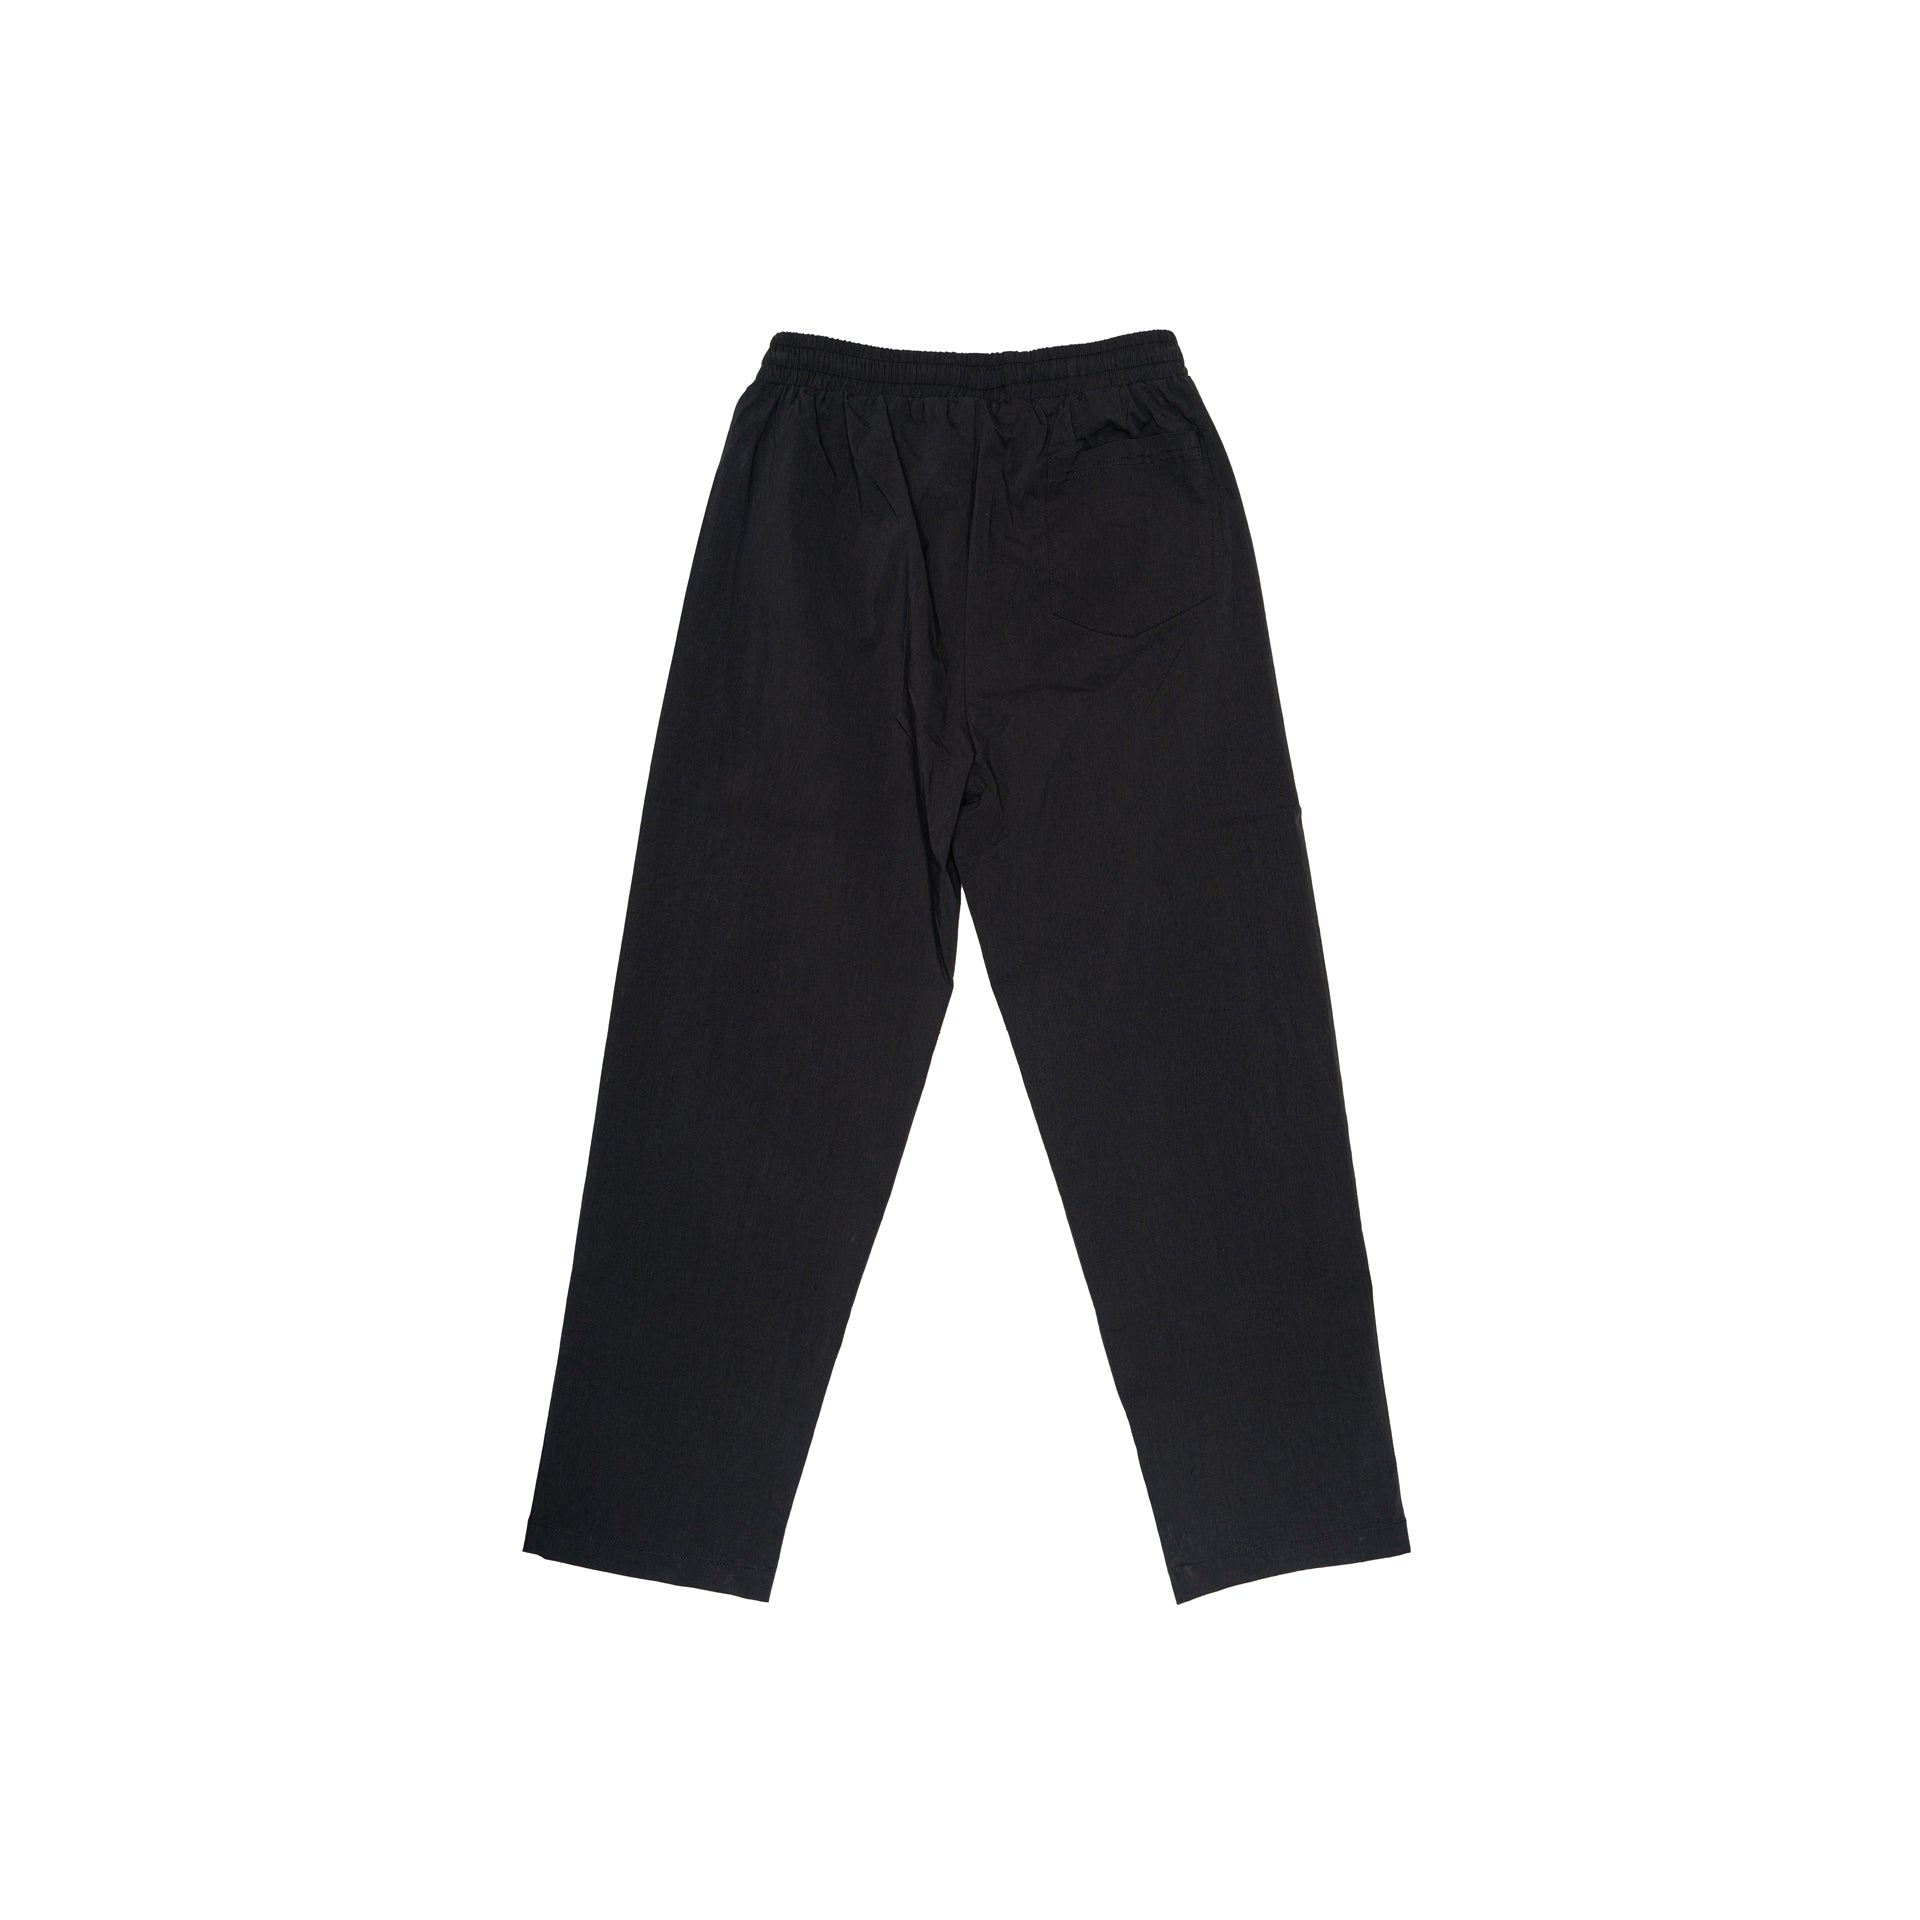 Black Premium Pants by Brandtionary